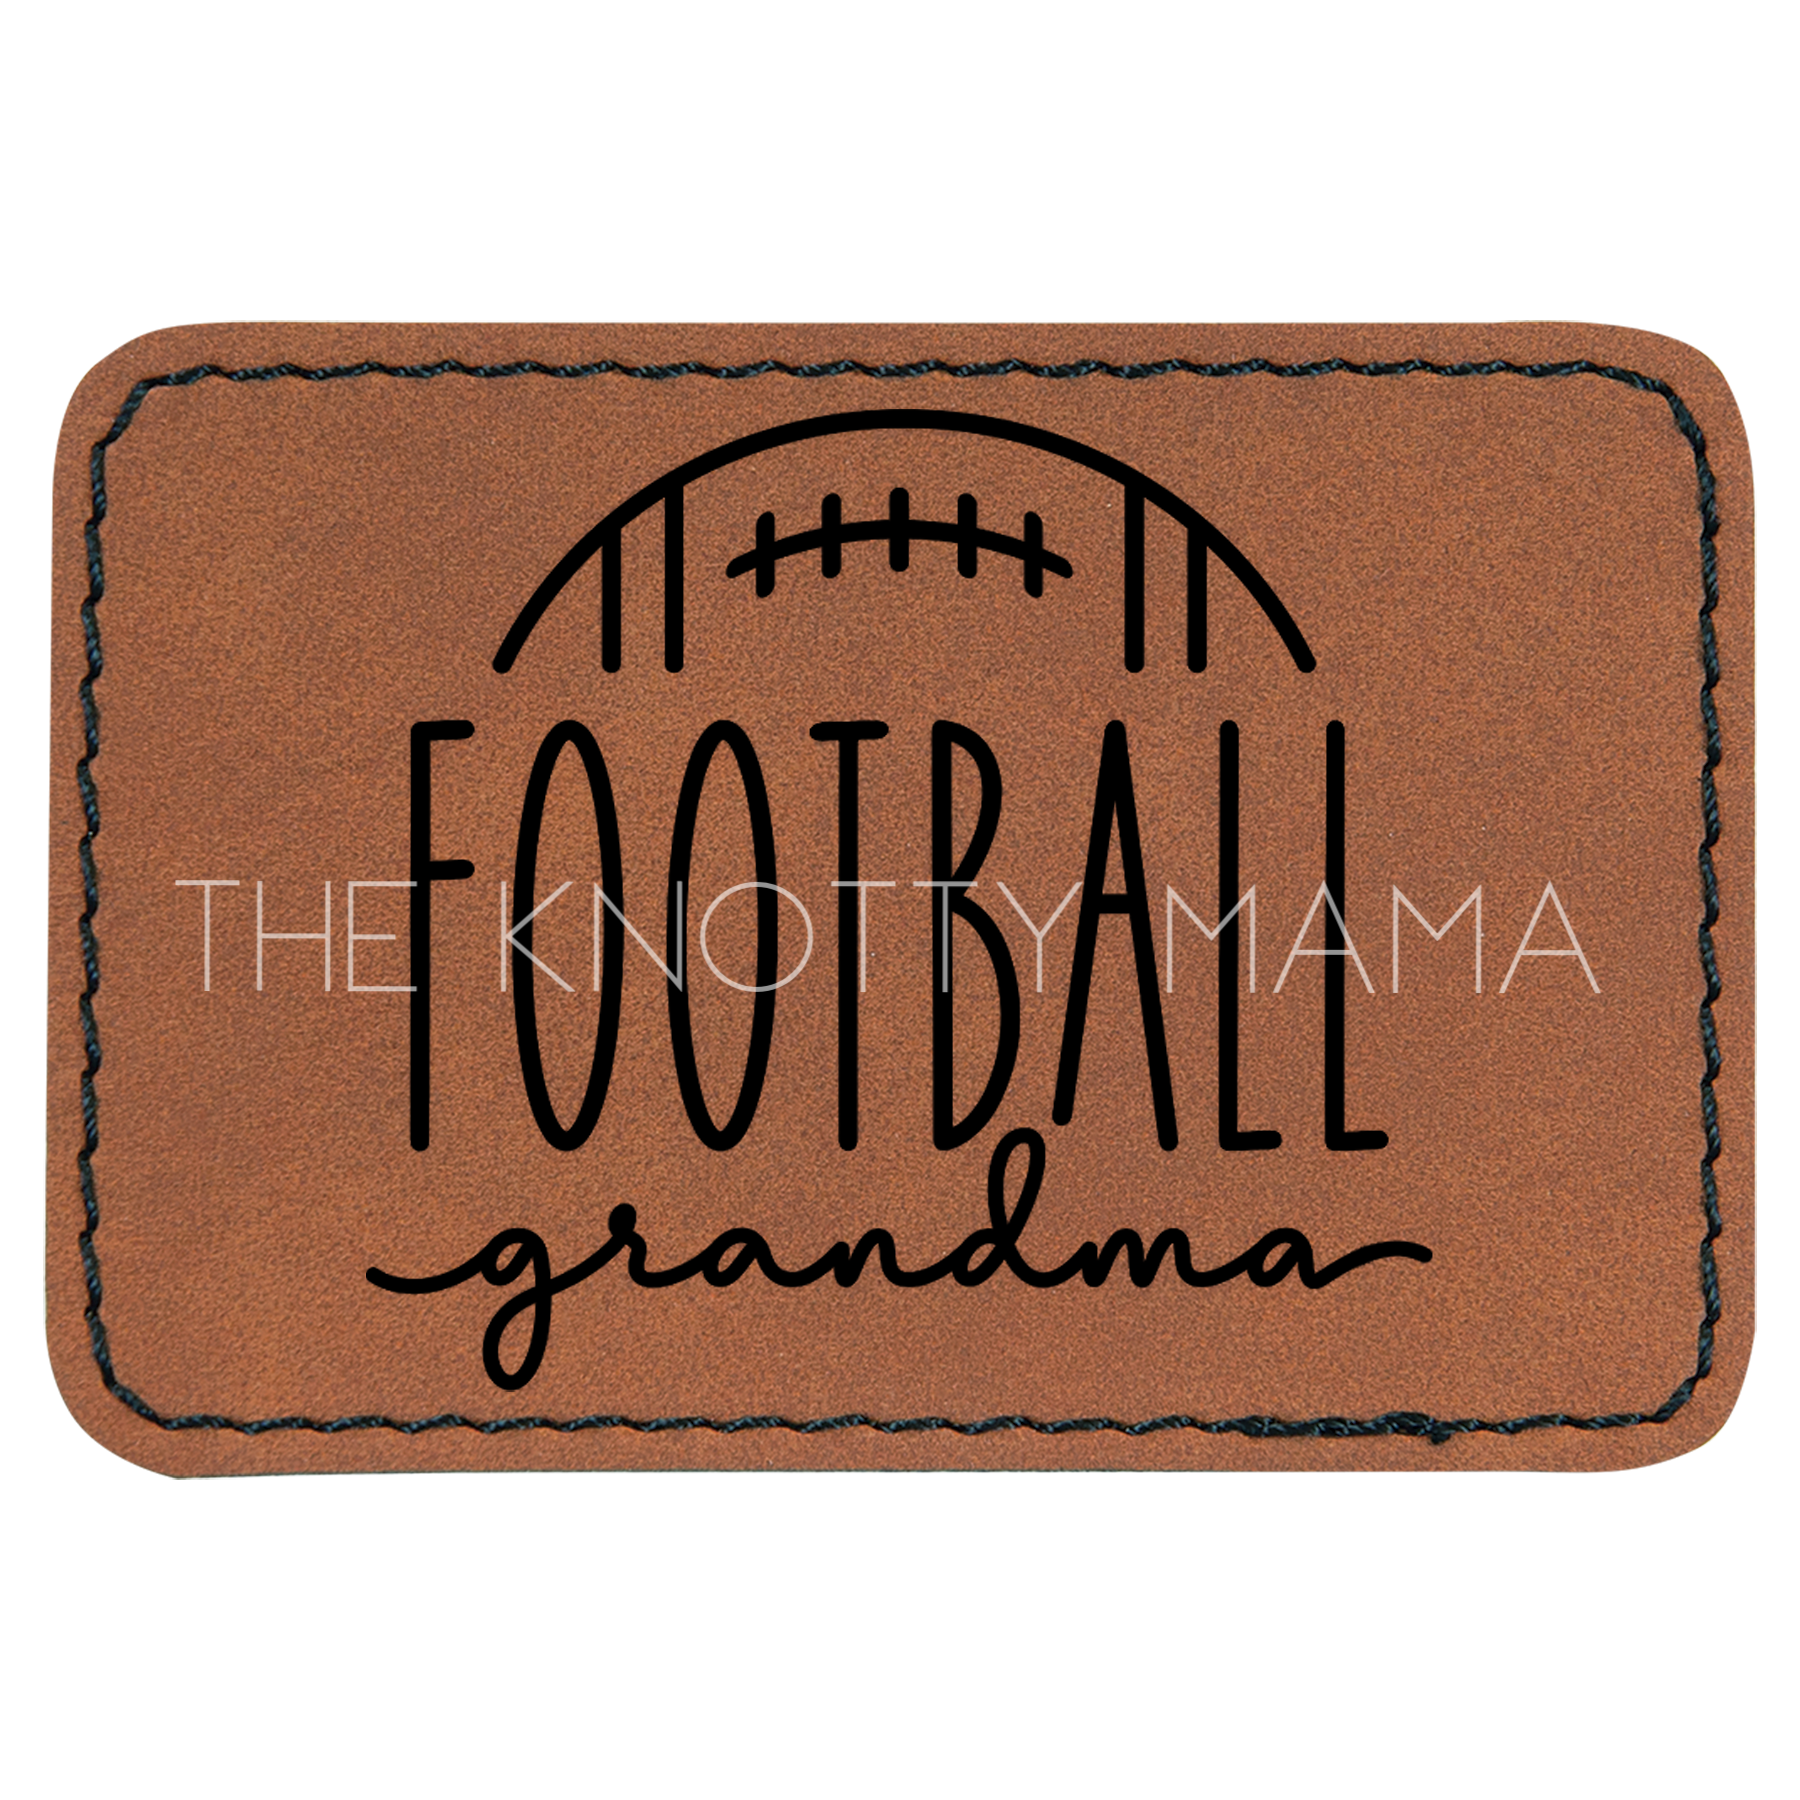 Football Grandma Doodle Patch